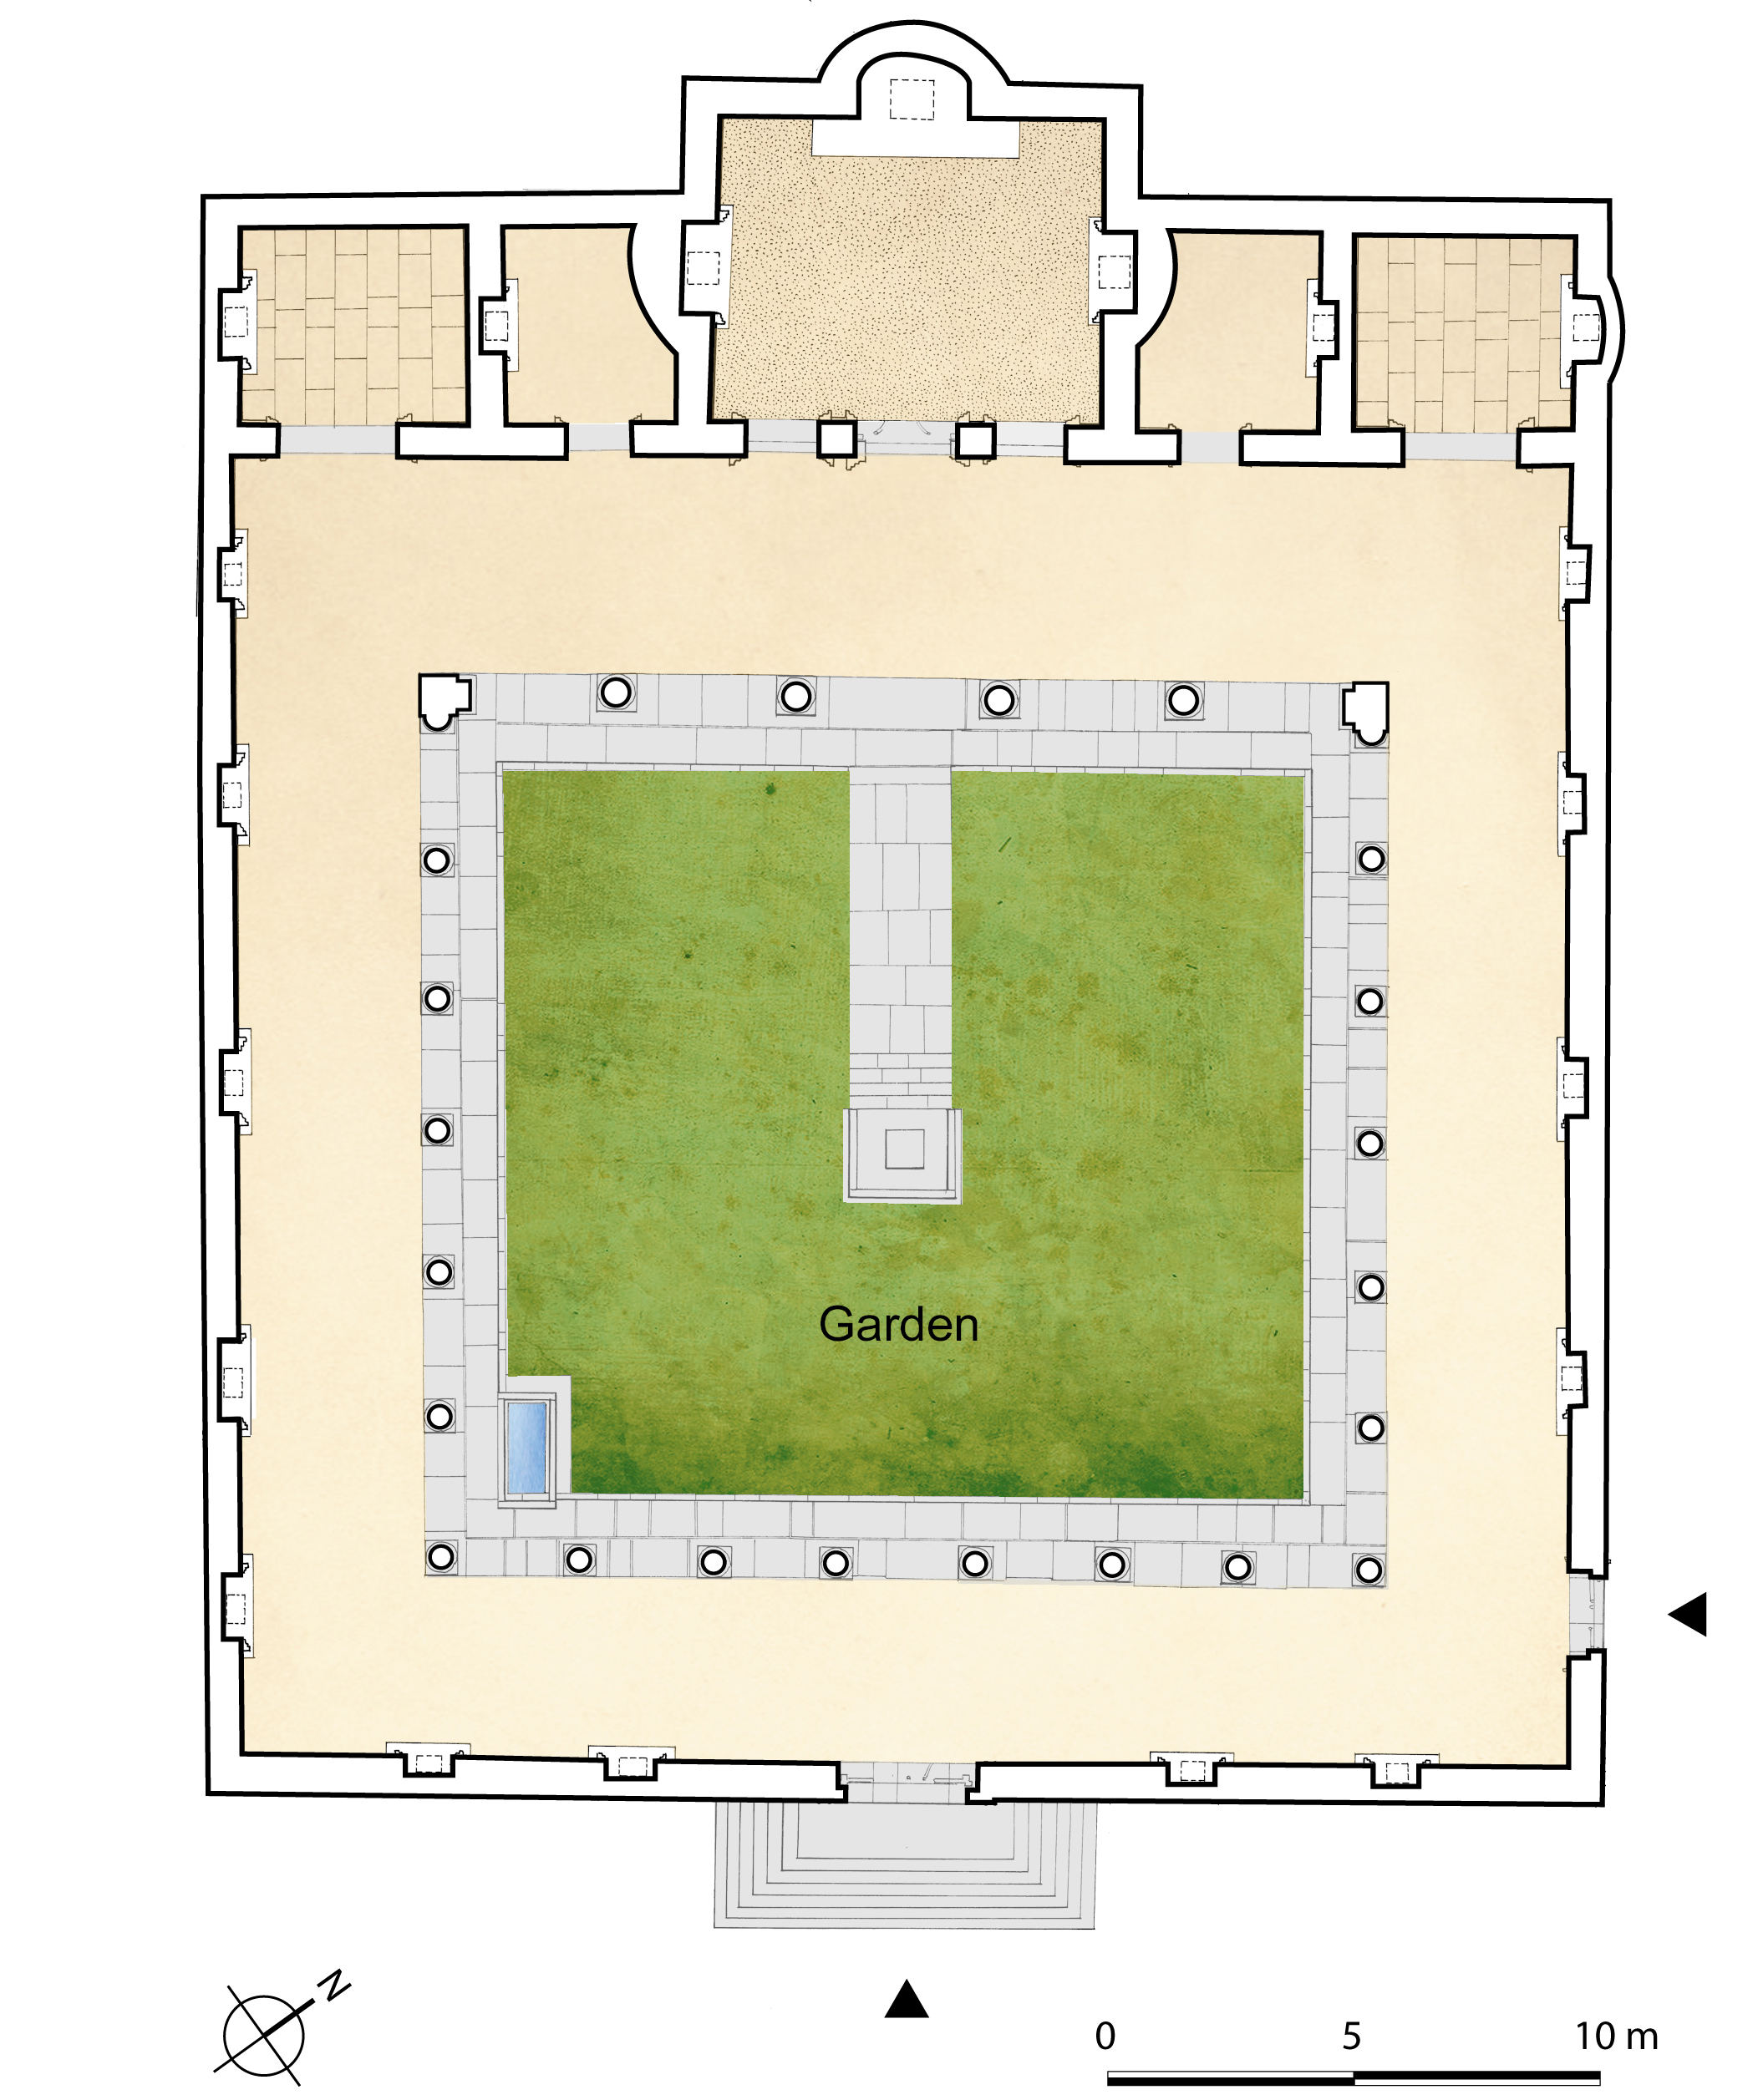 Plan of the Sanctuary B, the templa Concordiae